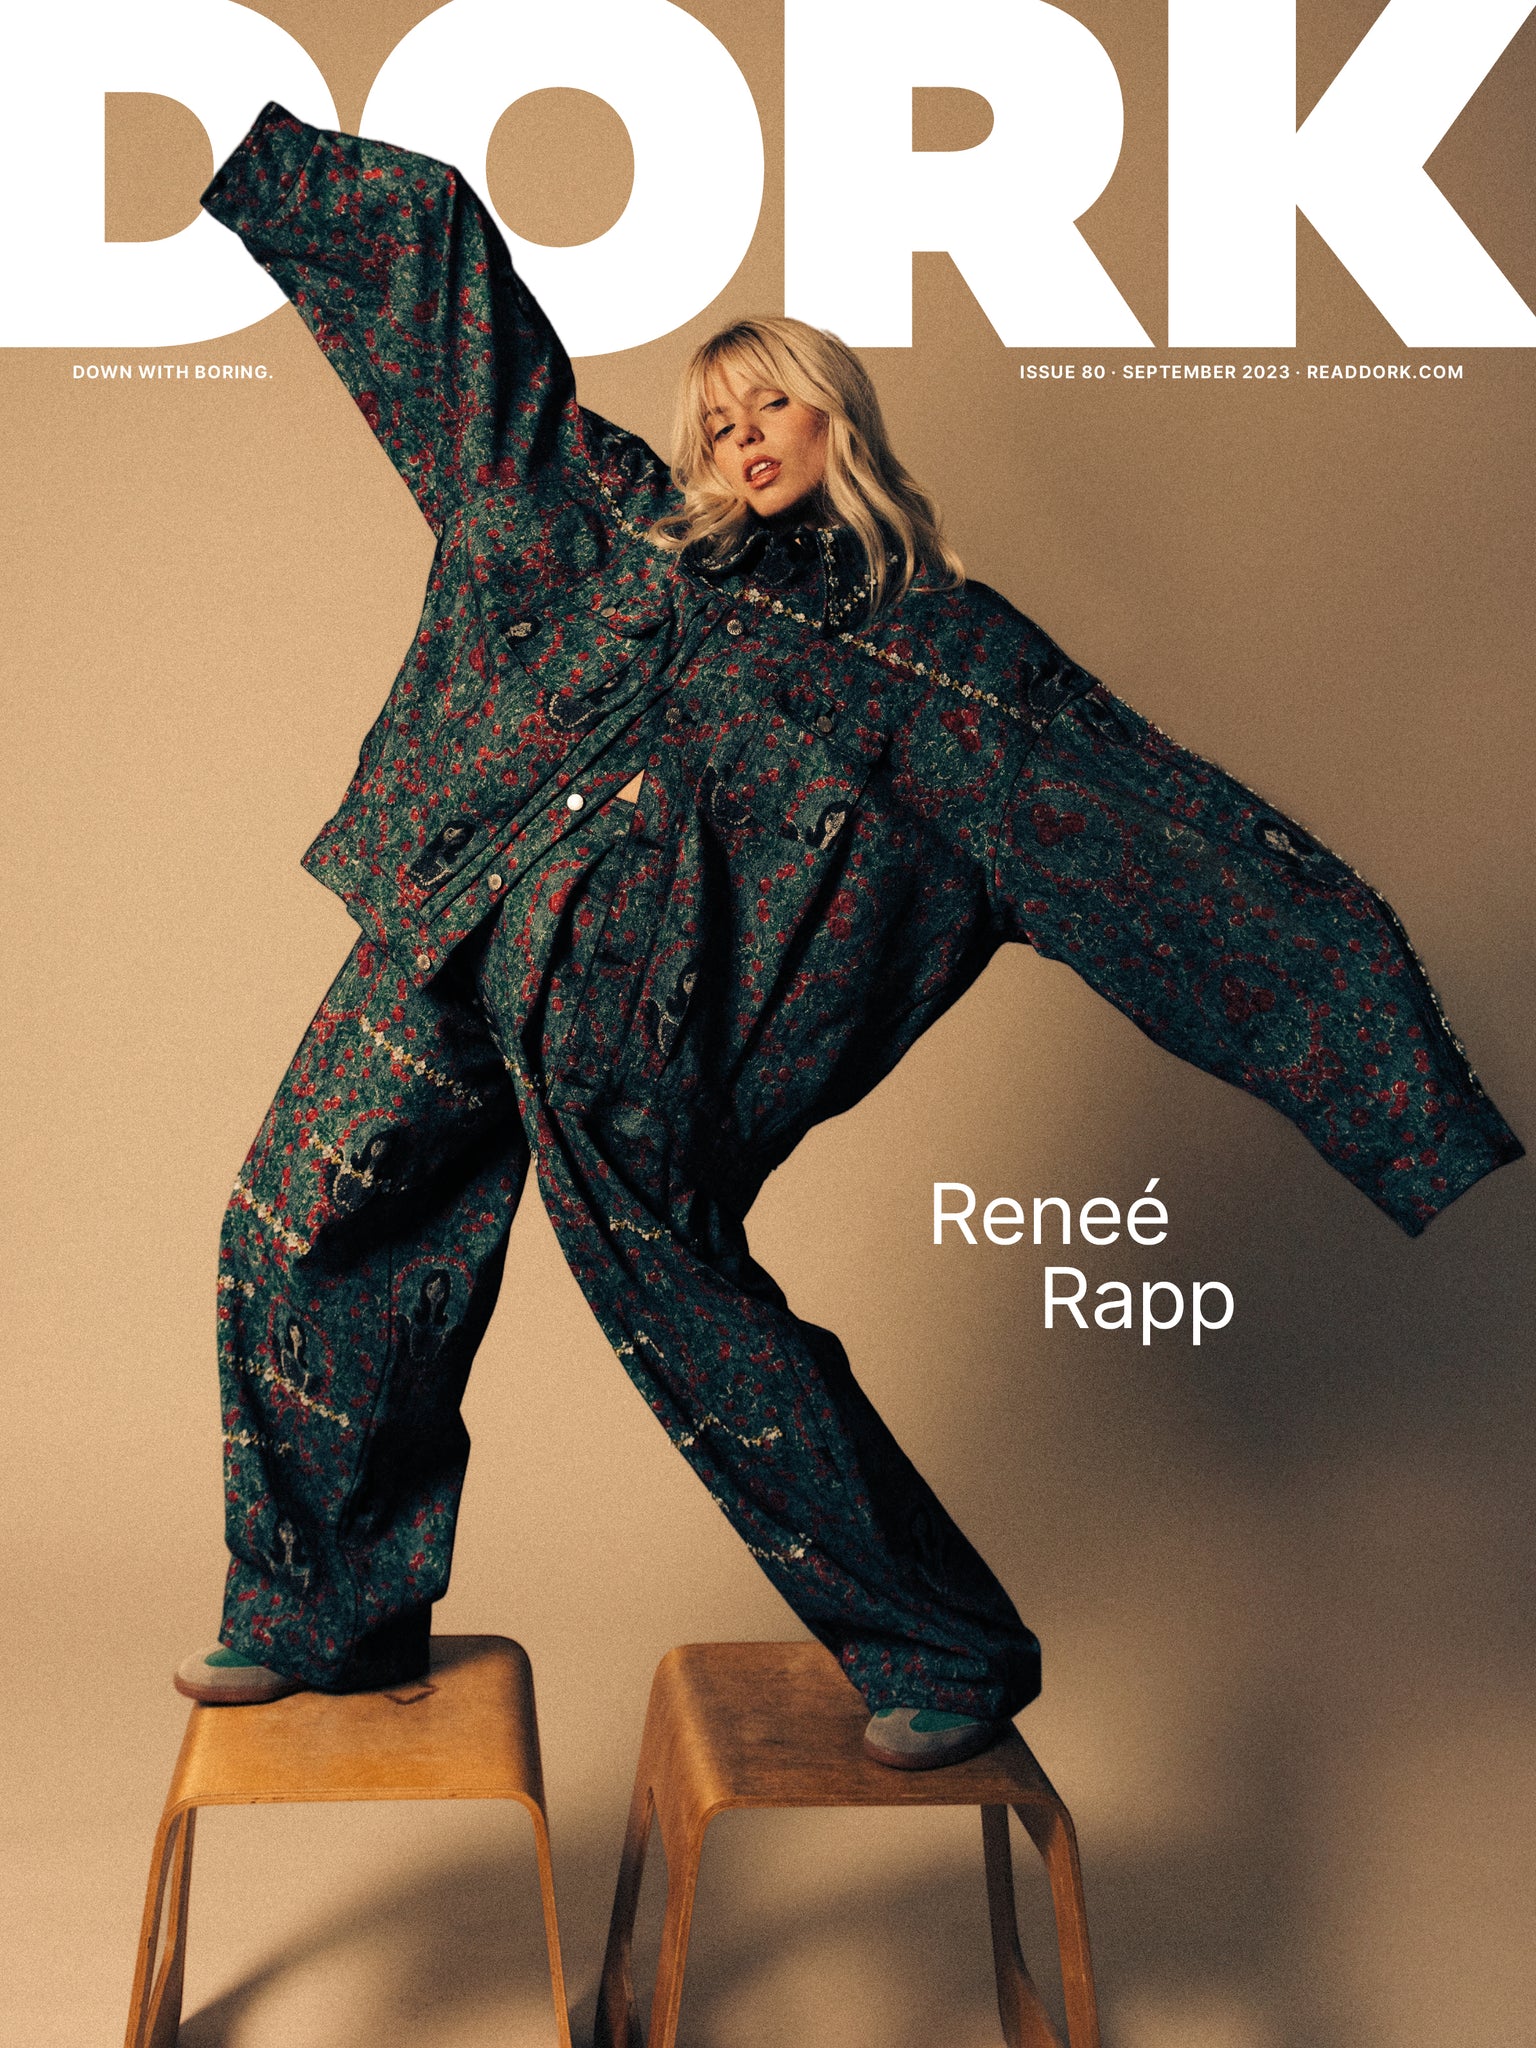 Dork, September 2023 (Reneé Rapp cover)